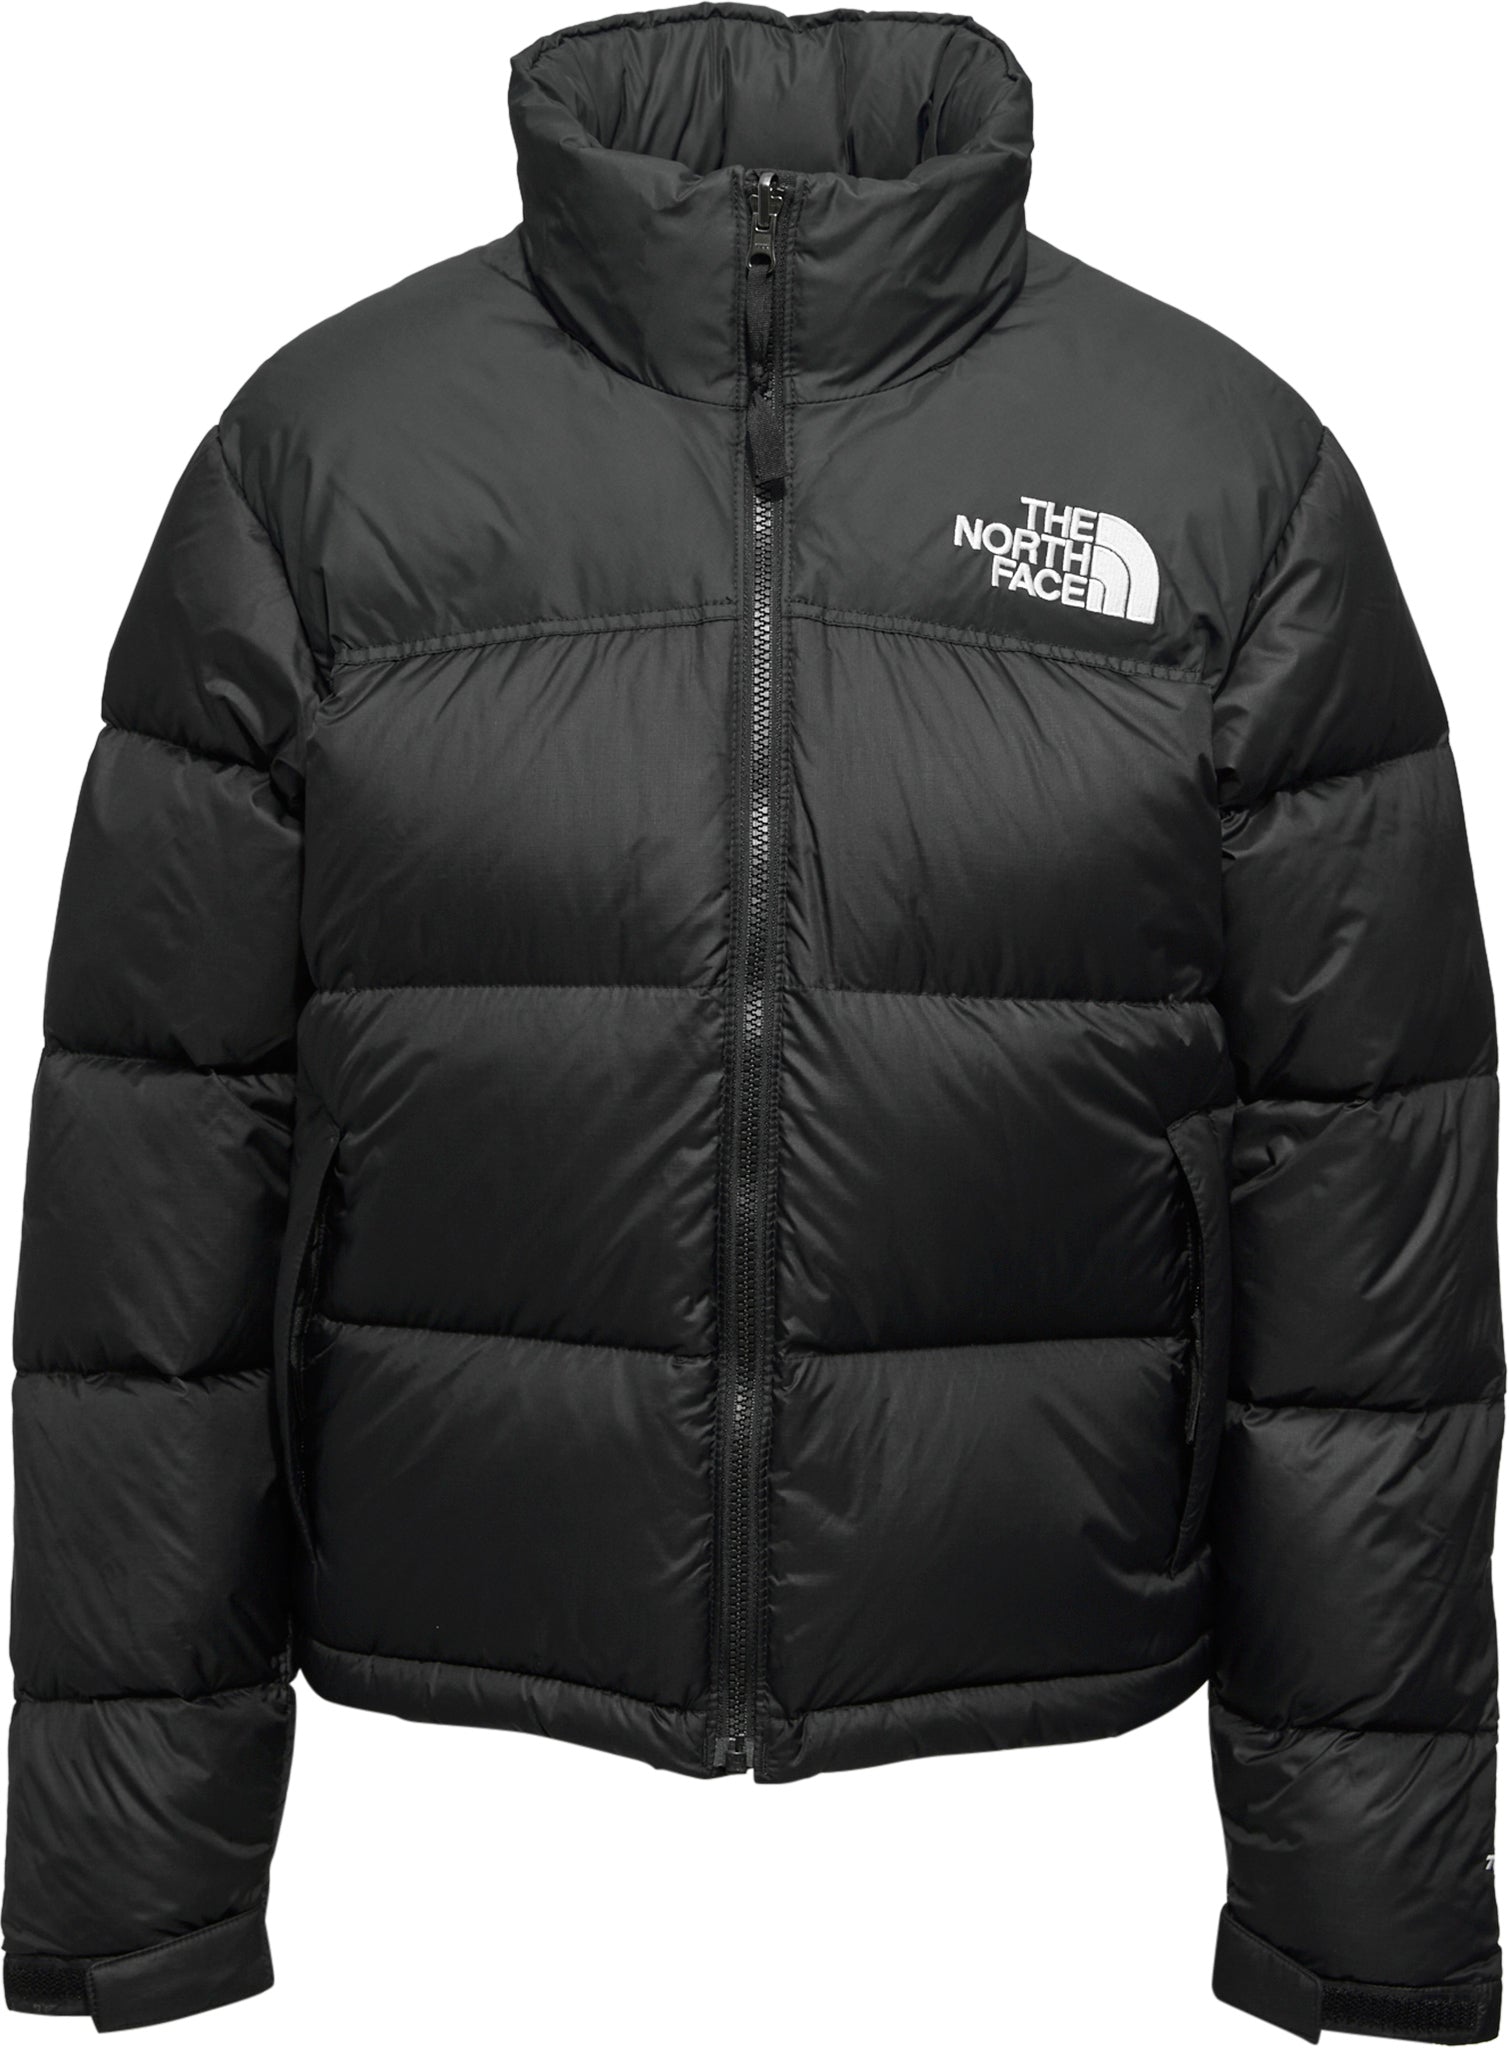 The North Face 1996 Retro Nuptse Jacket - Women's | Altitude Sports